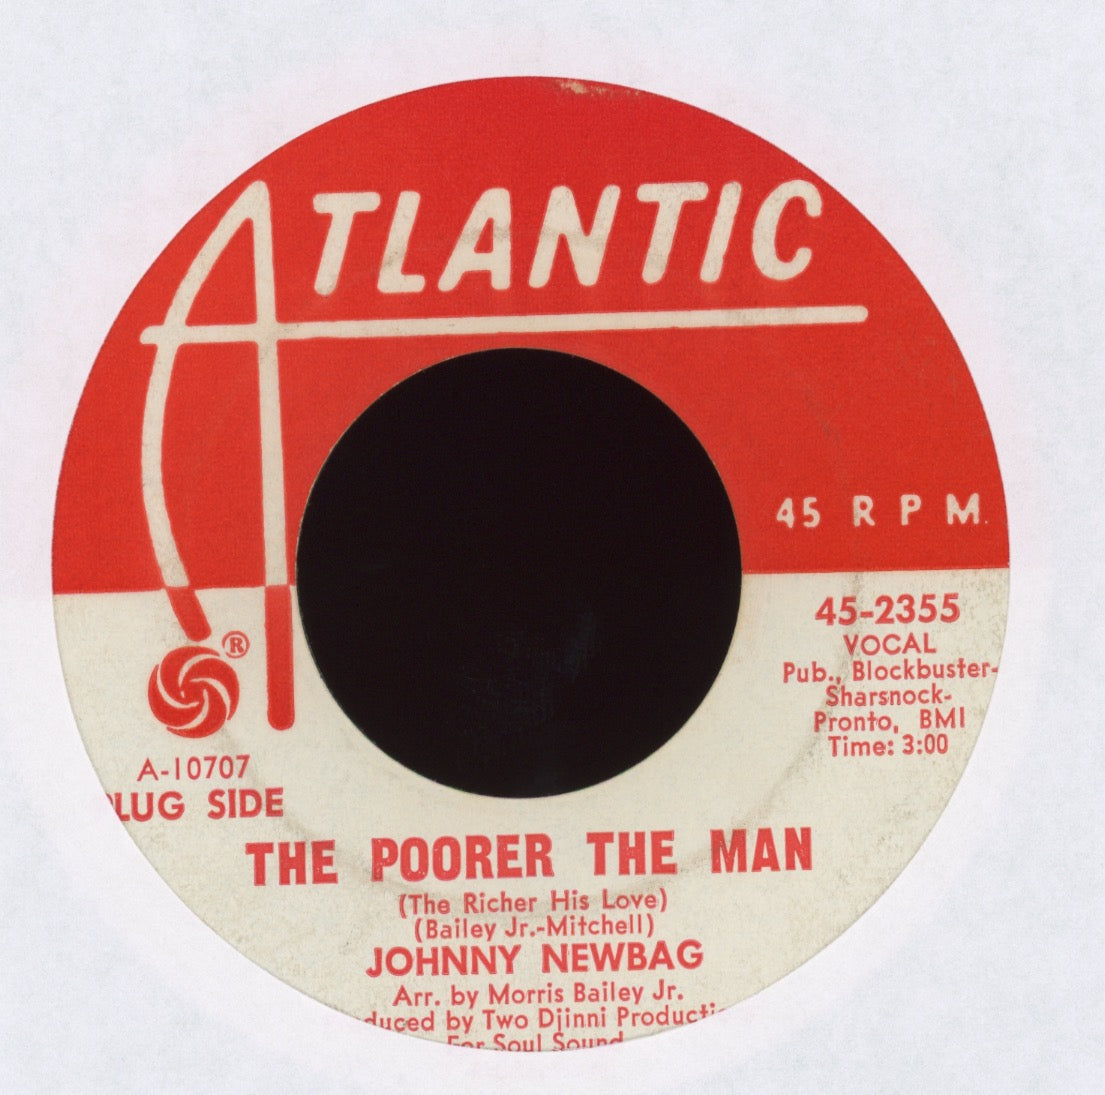 Johnny Newbag - Got To Get You Back on Atlantic Promo